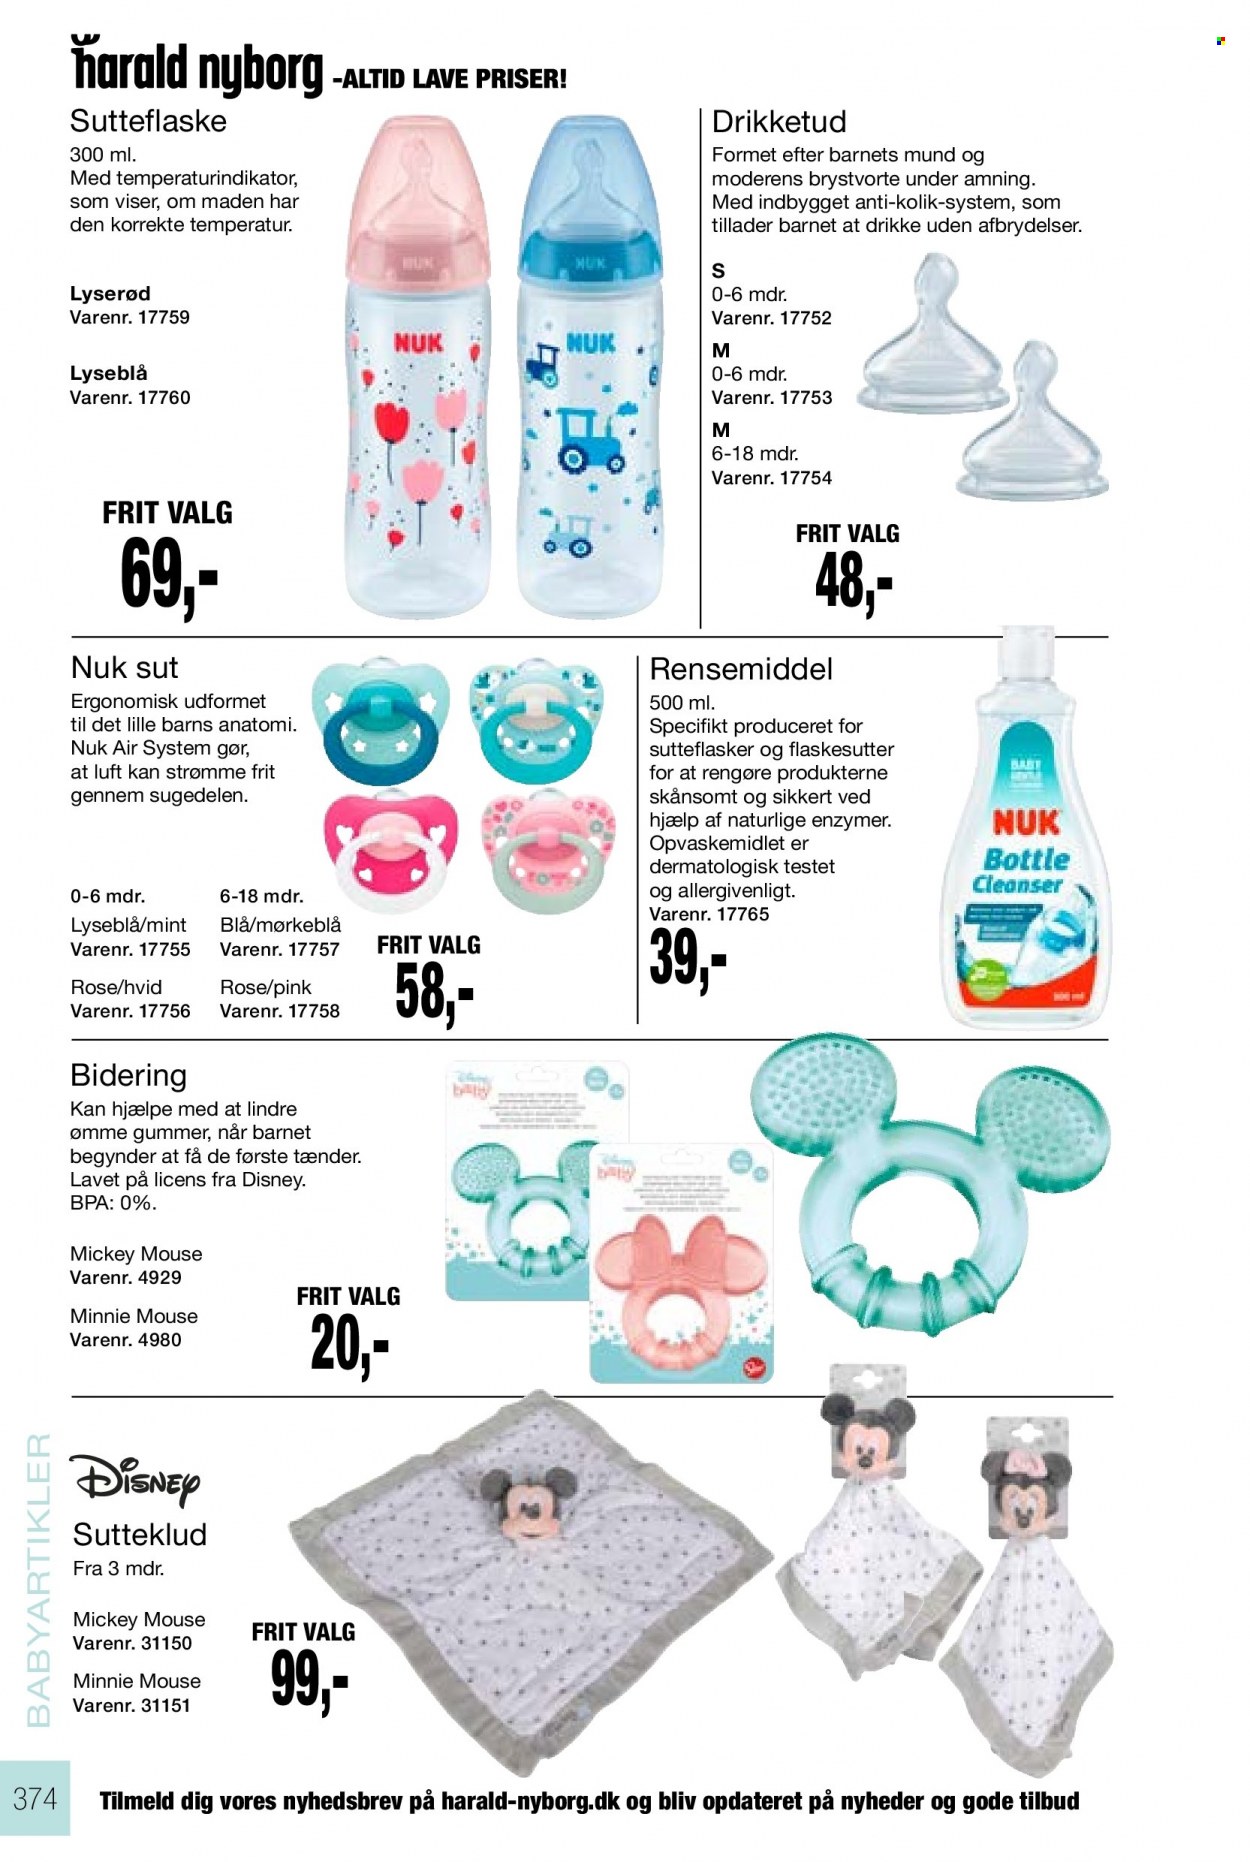 thumbnail - Harald Nyborg tilbud  - tilbudsprodukter - Mickey Mouse, Minnie Mouse, Disney, Nuk. Side 374.